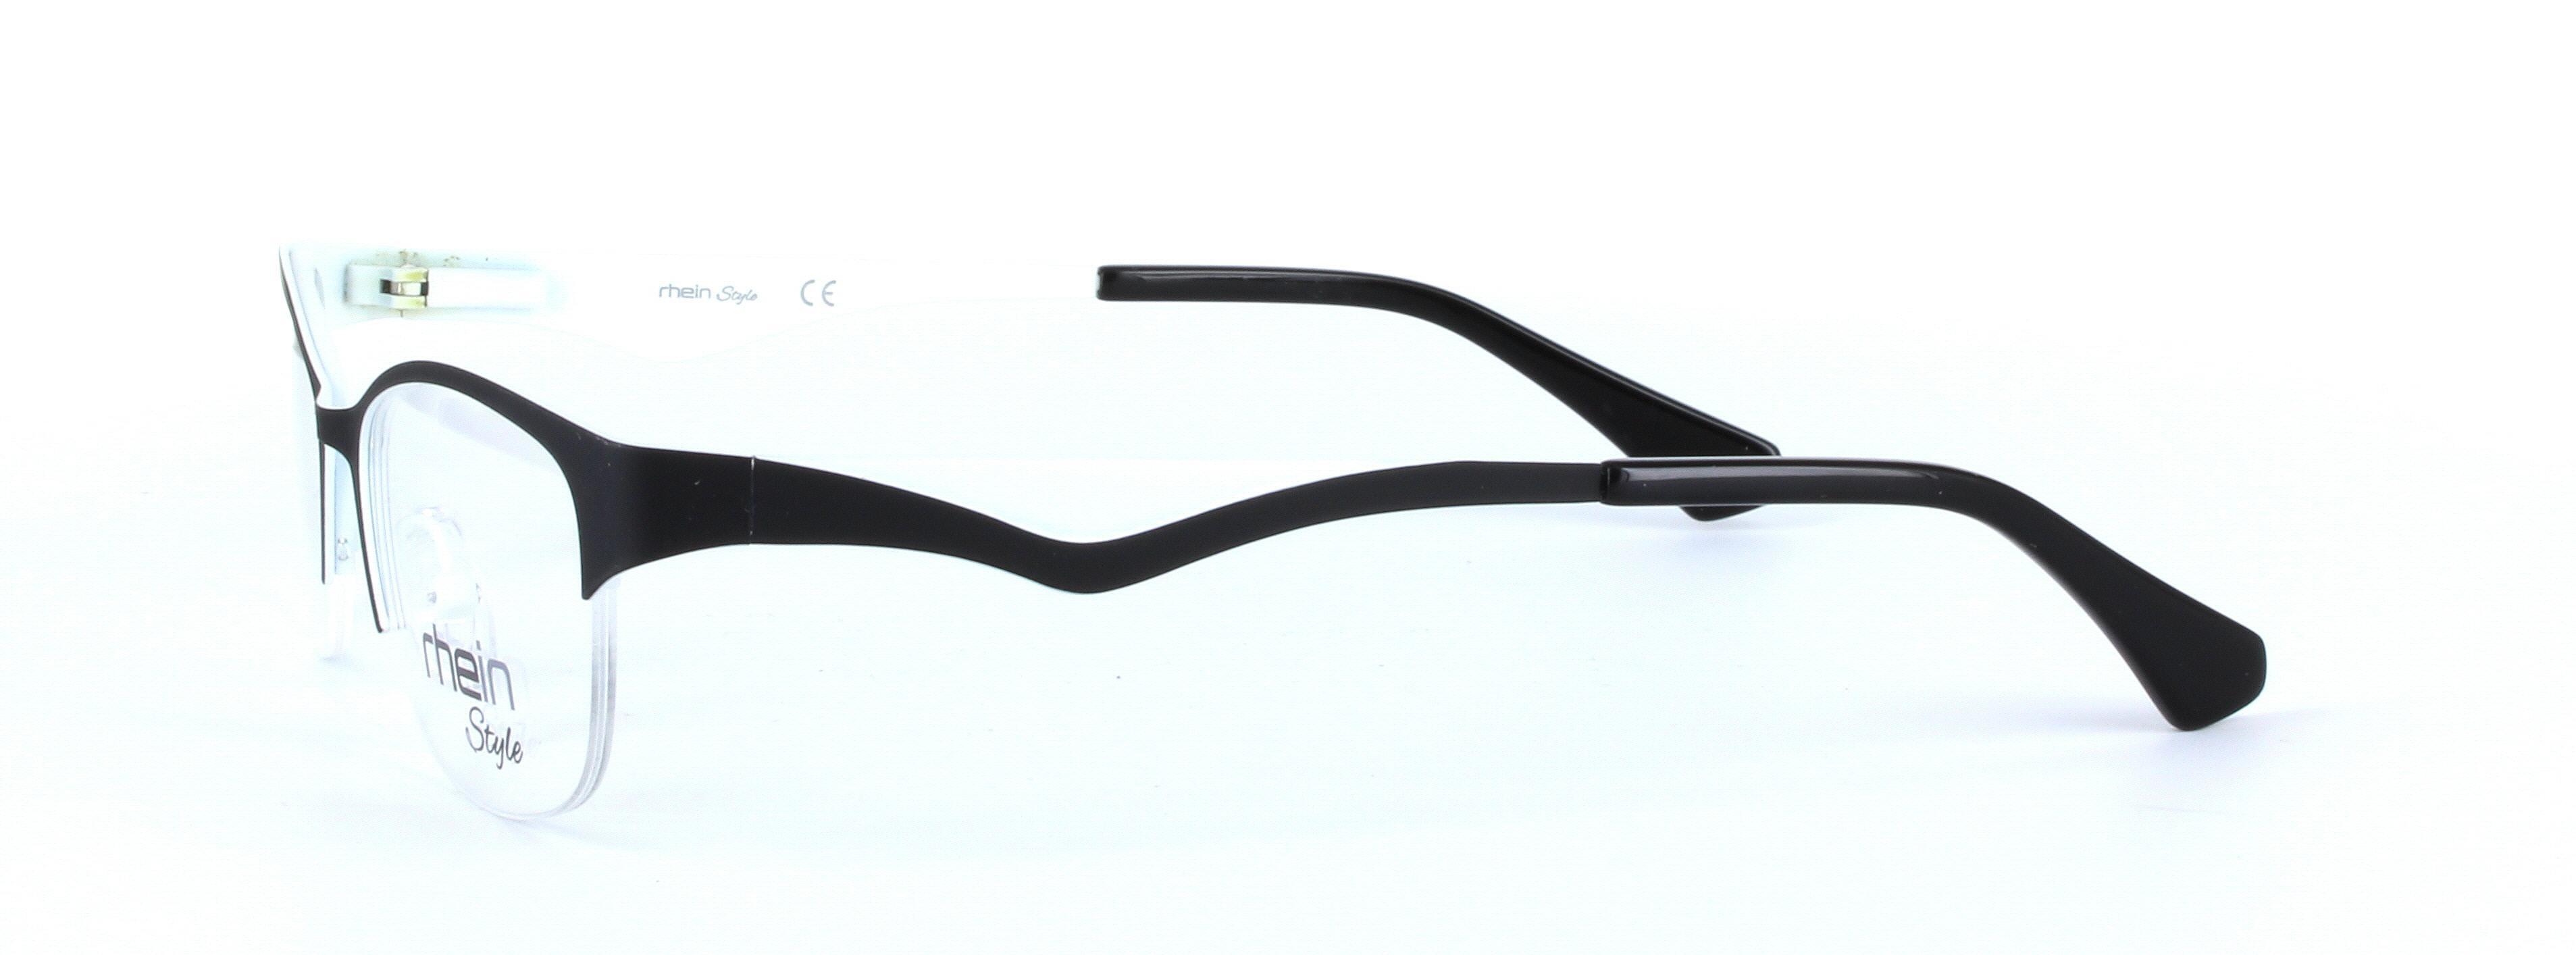 Kelly Black Semi Rimless Oval Rectangular Metal Glasses - Image View 2